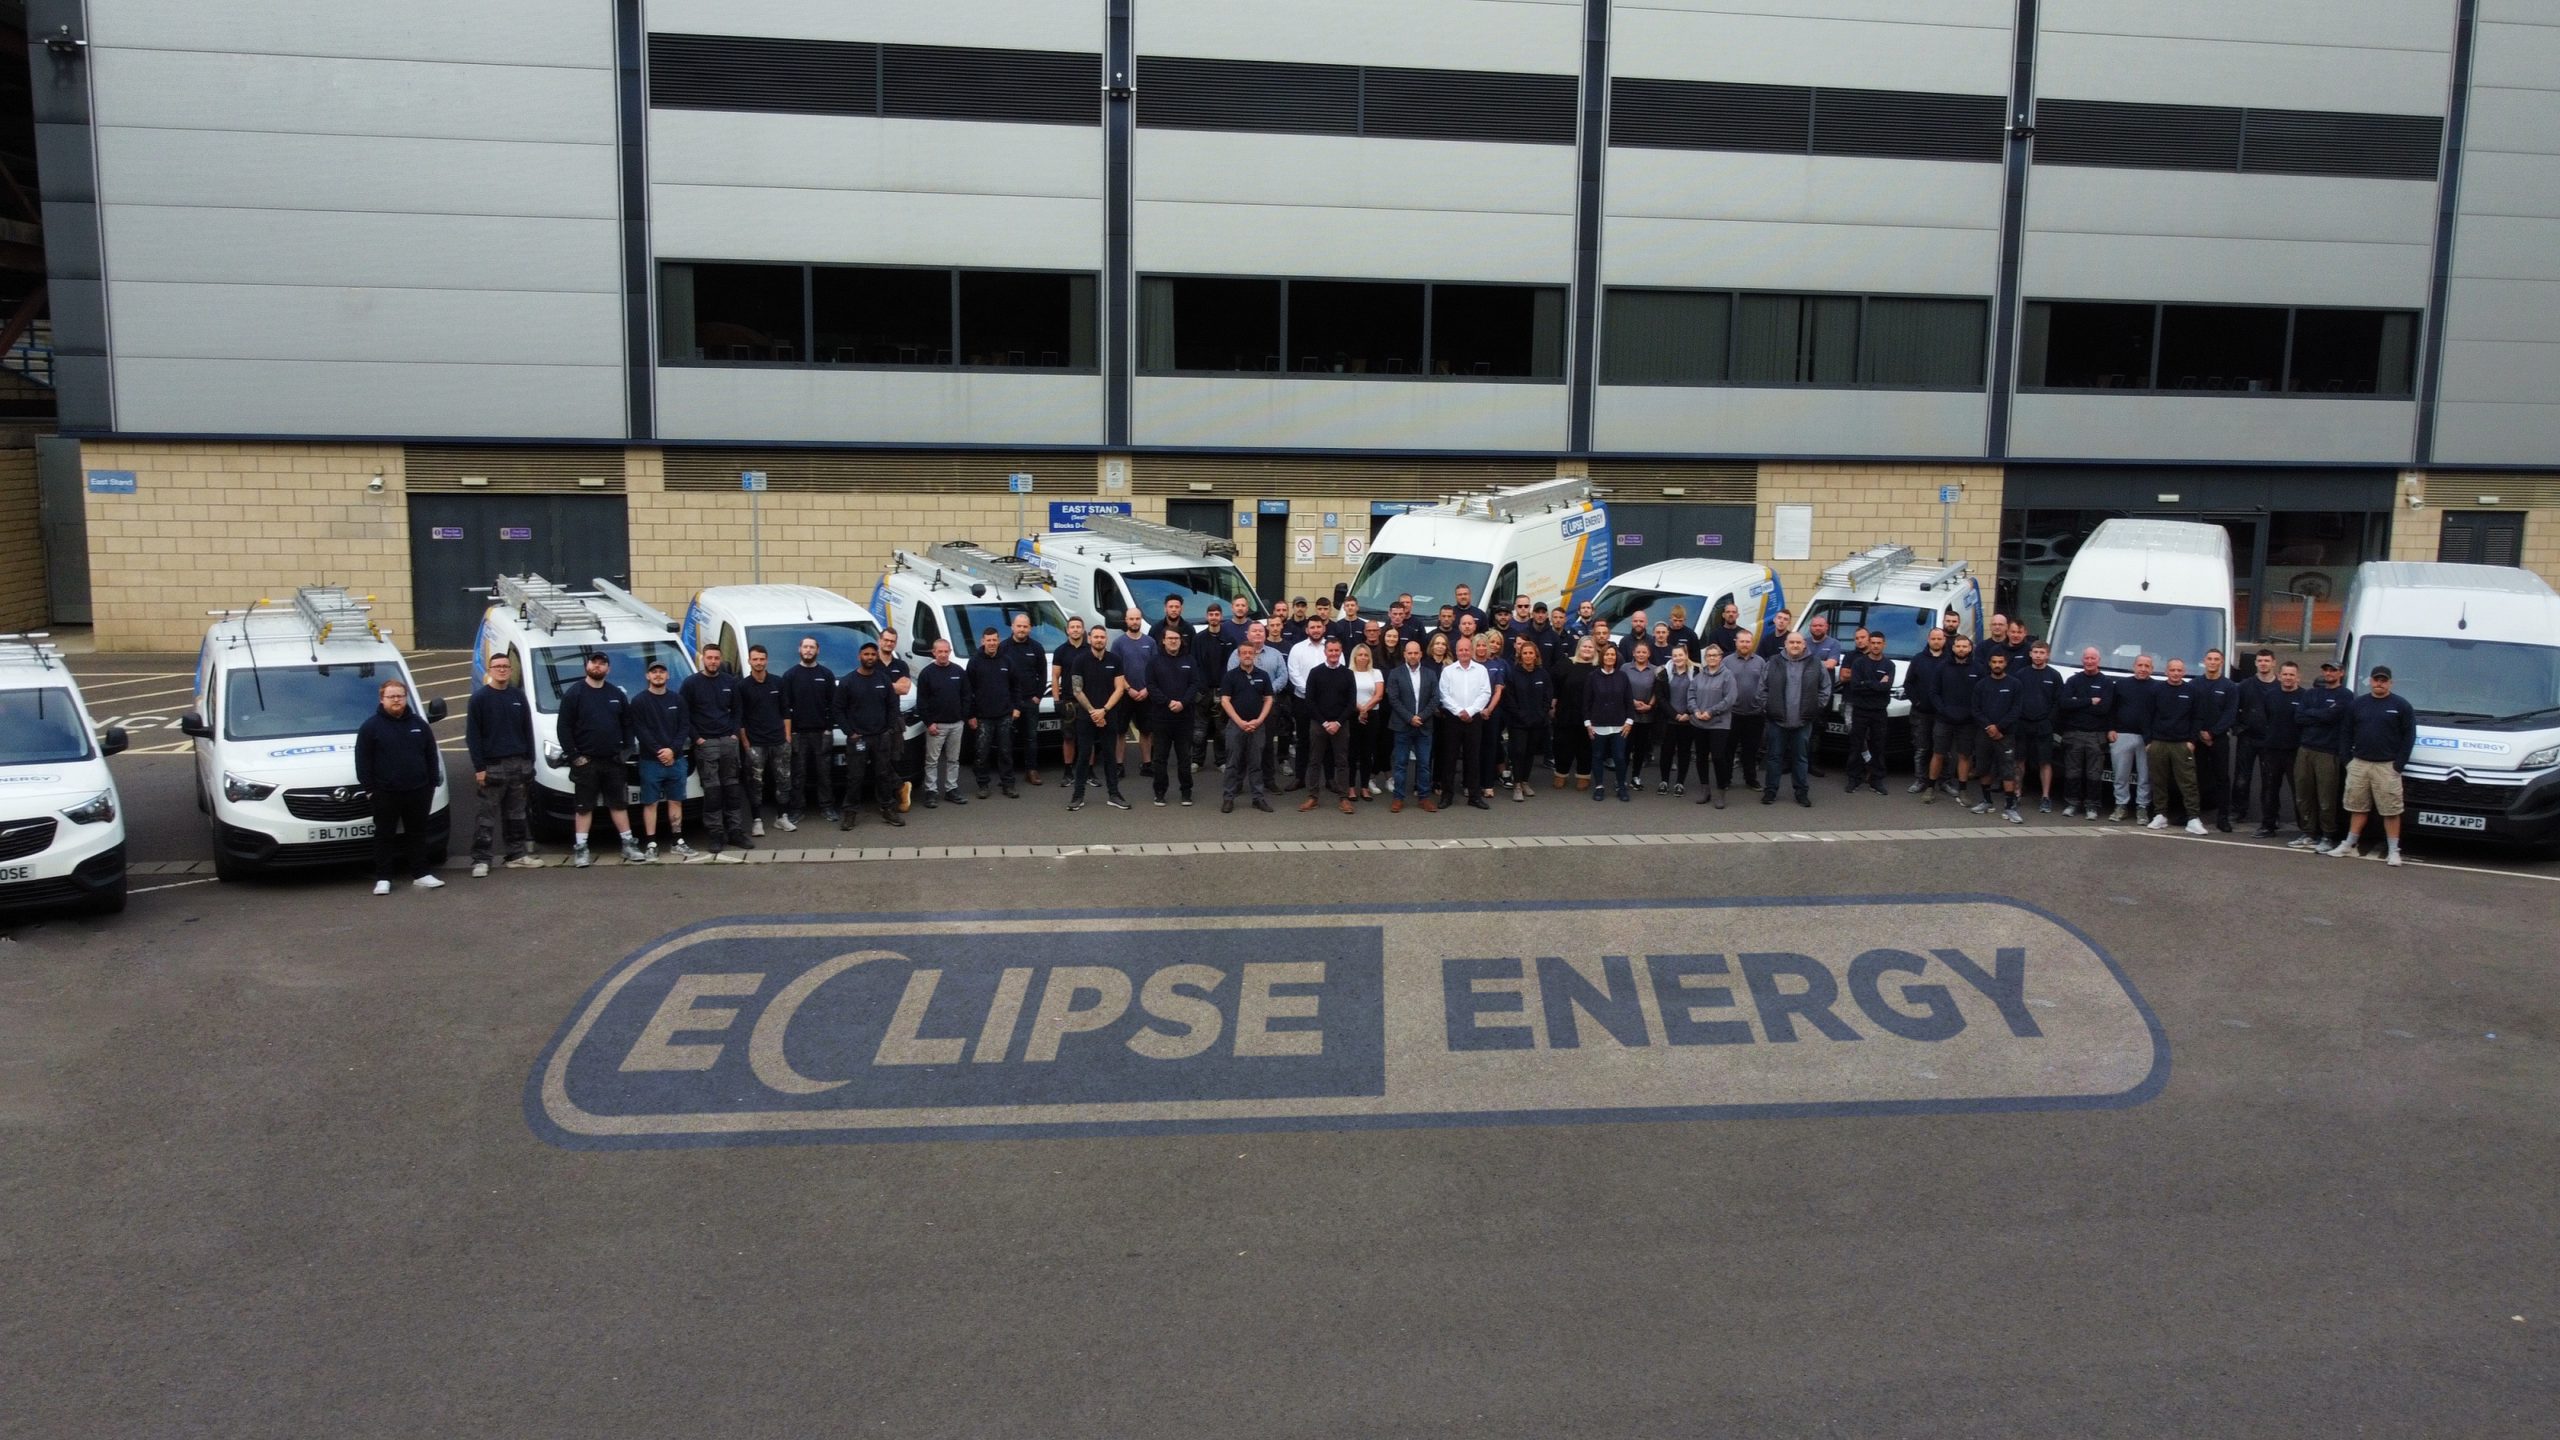 Eclipse Energy creates jobs as solar energy booms in Calderdale